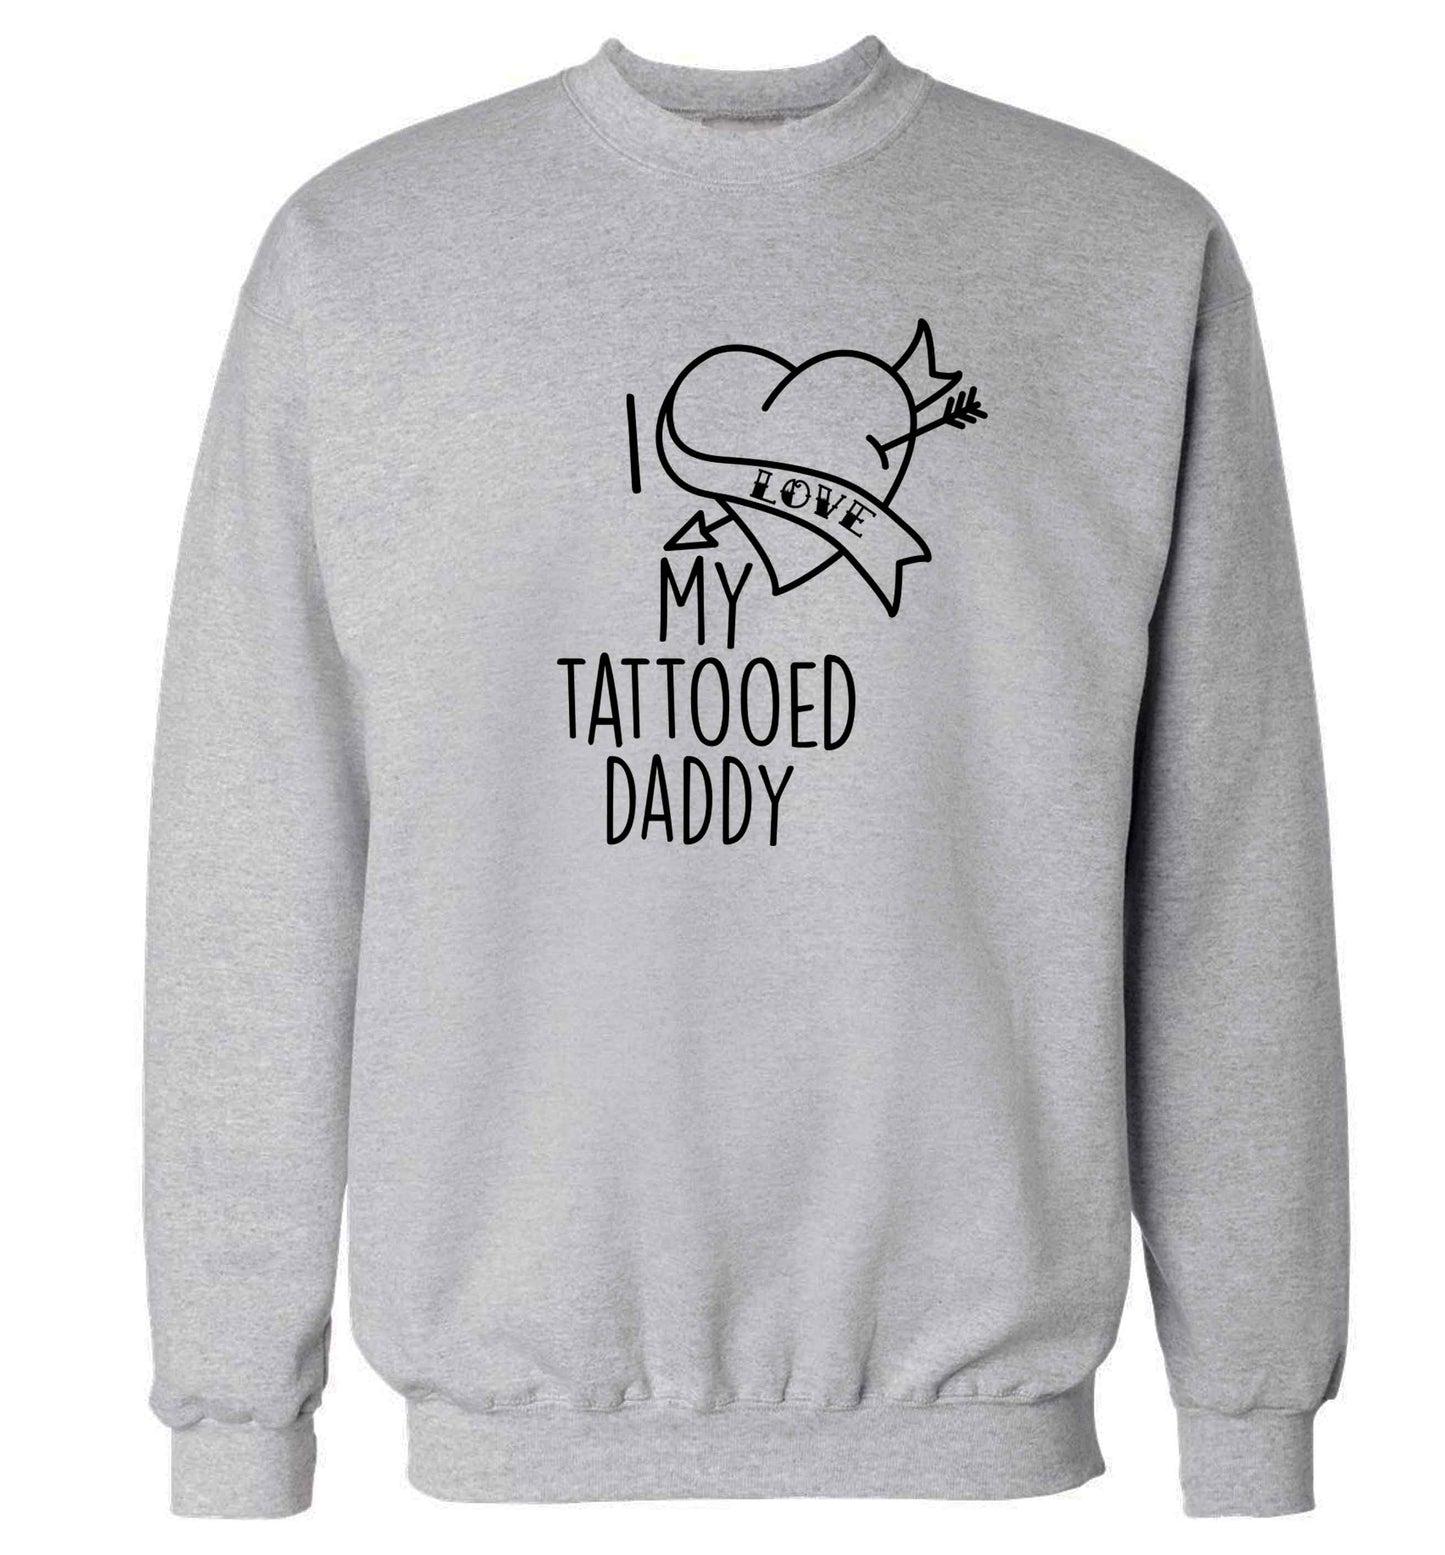 I love my tattooed daddy adult's unisex grey sweater 2XL